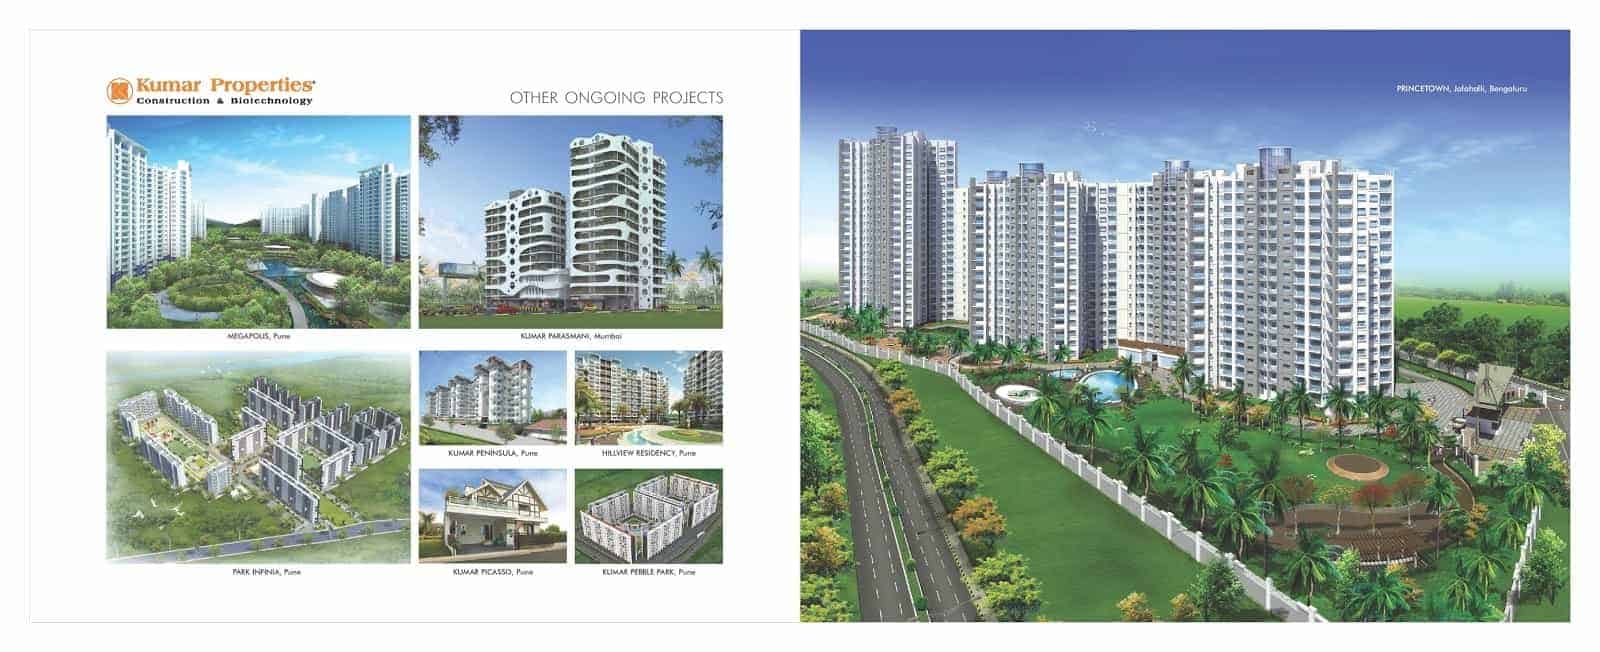 Construction company - Kumar Properties